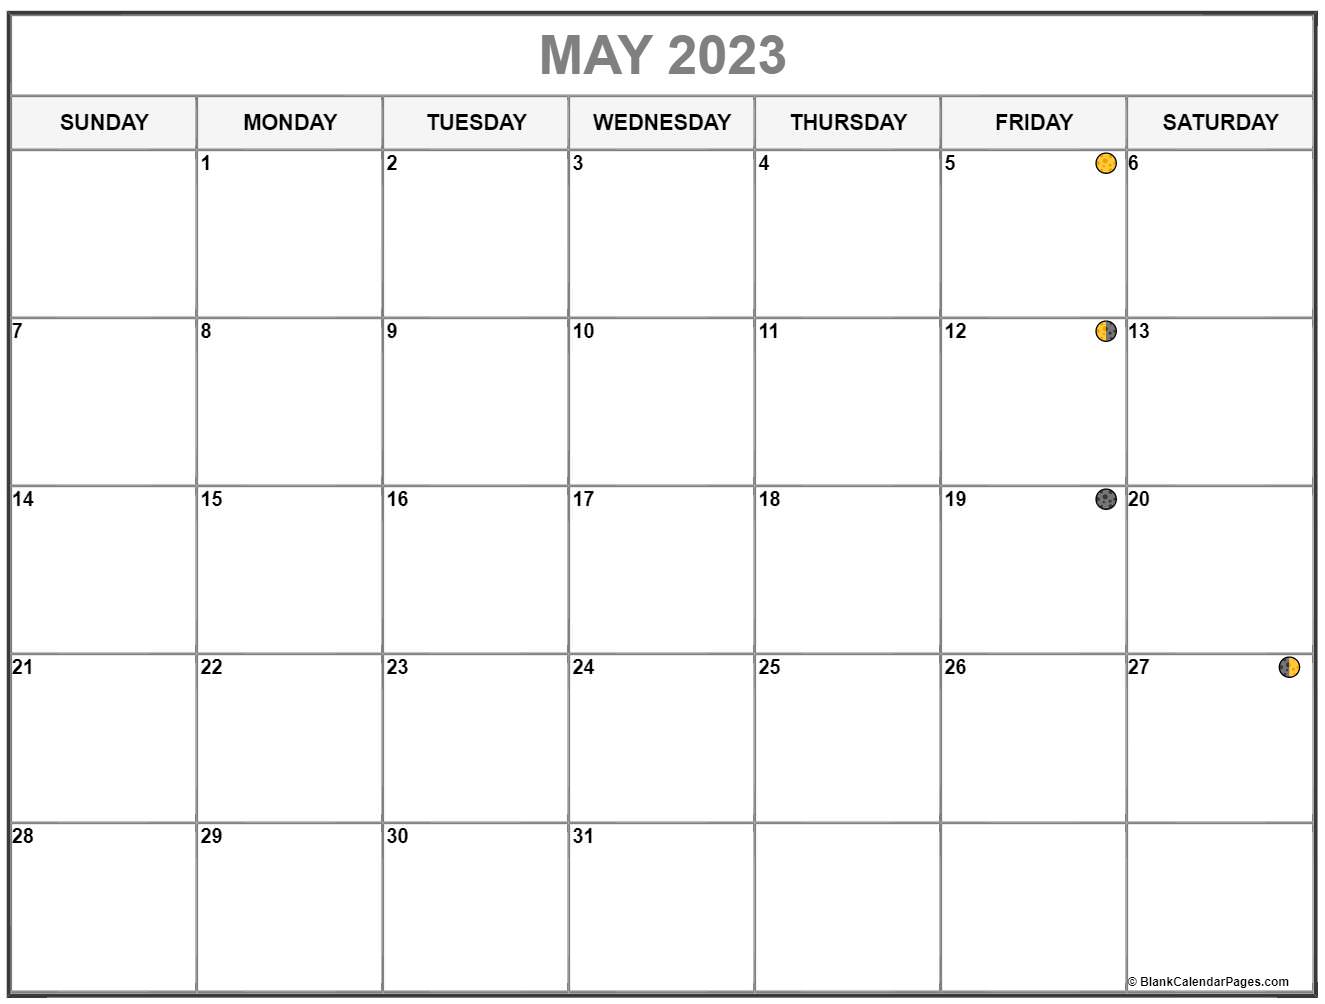 May-2023-Lunar-Calendar.